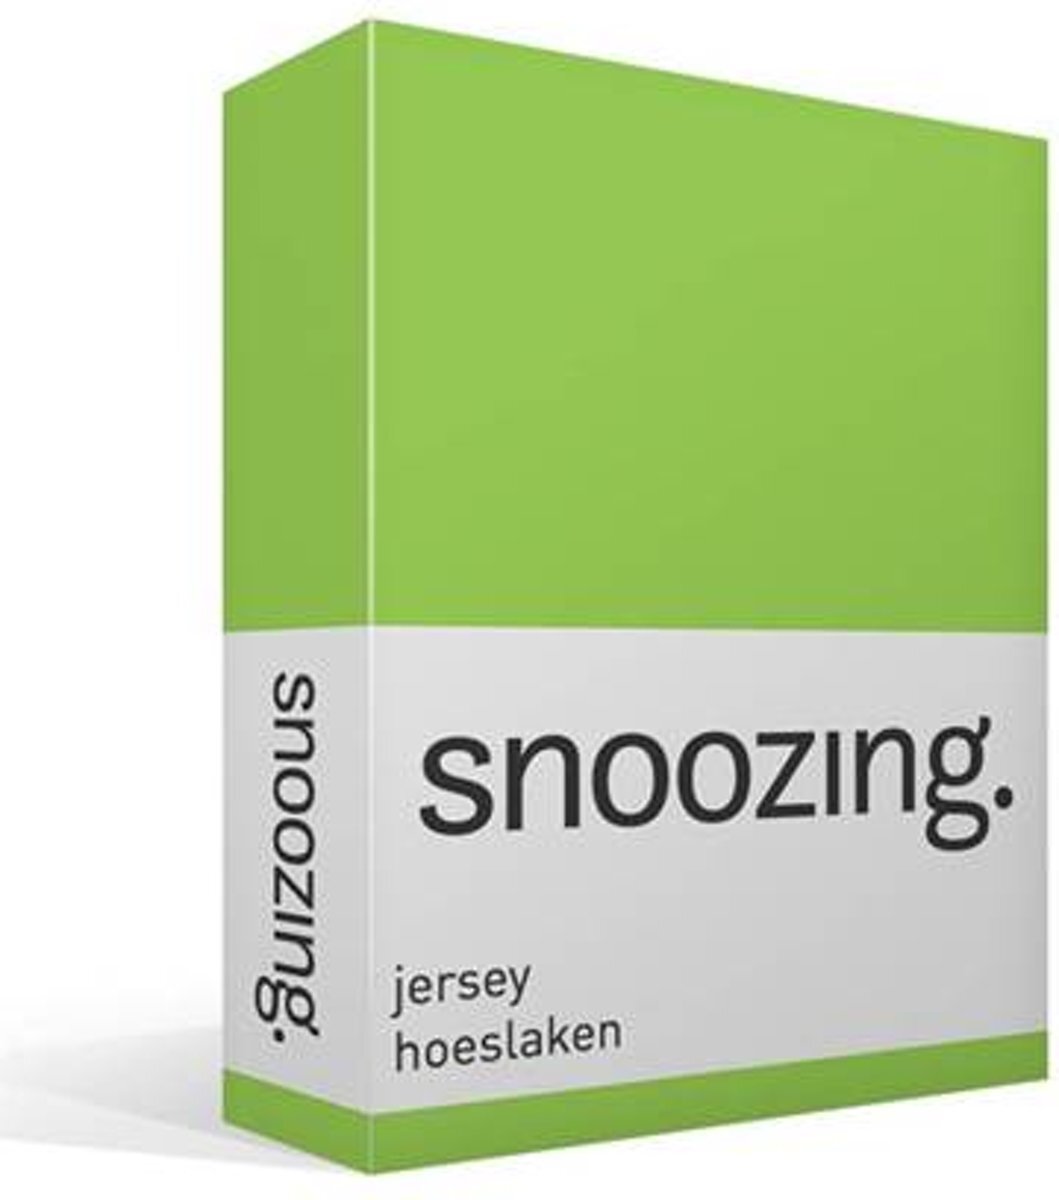 Snoozing Jersey - Hoeslaken - 100% gebreide katoen - 140x200 cm - Lime